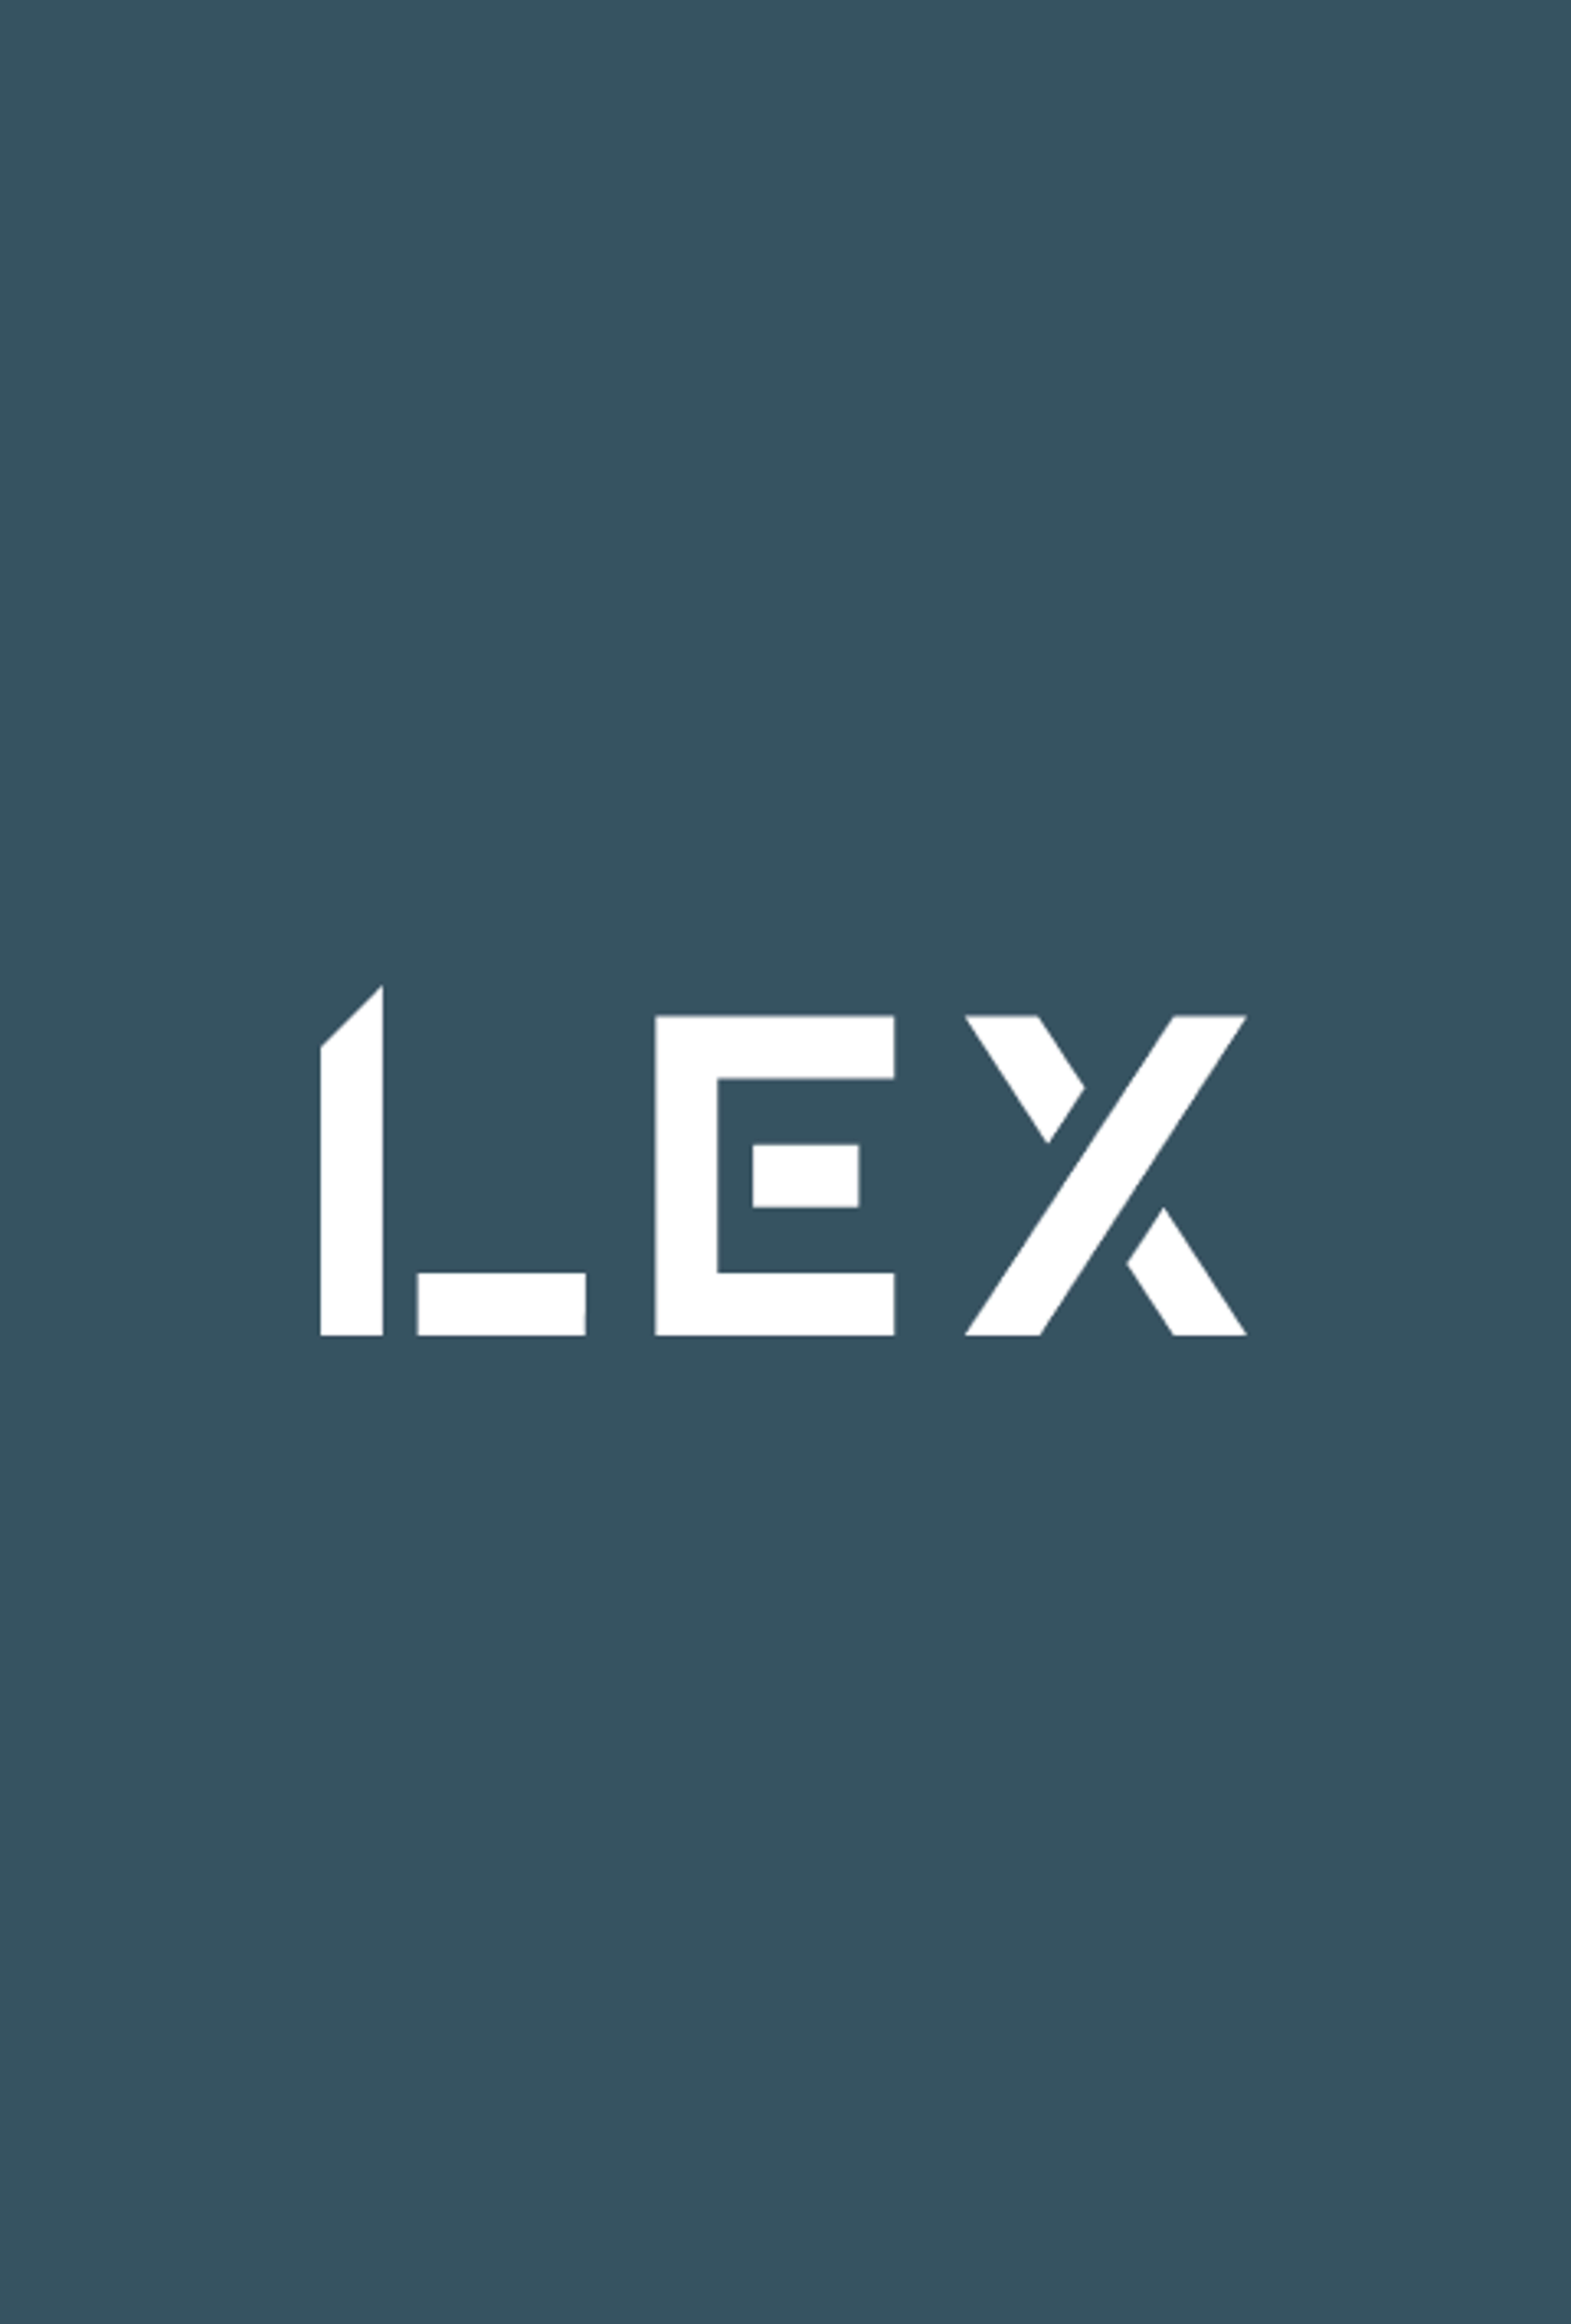 LEX Real Estate Investing Platform Review